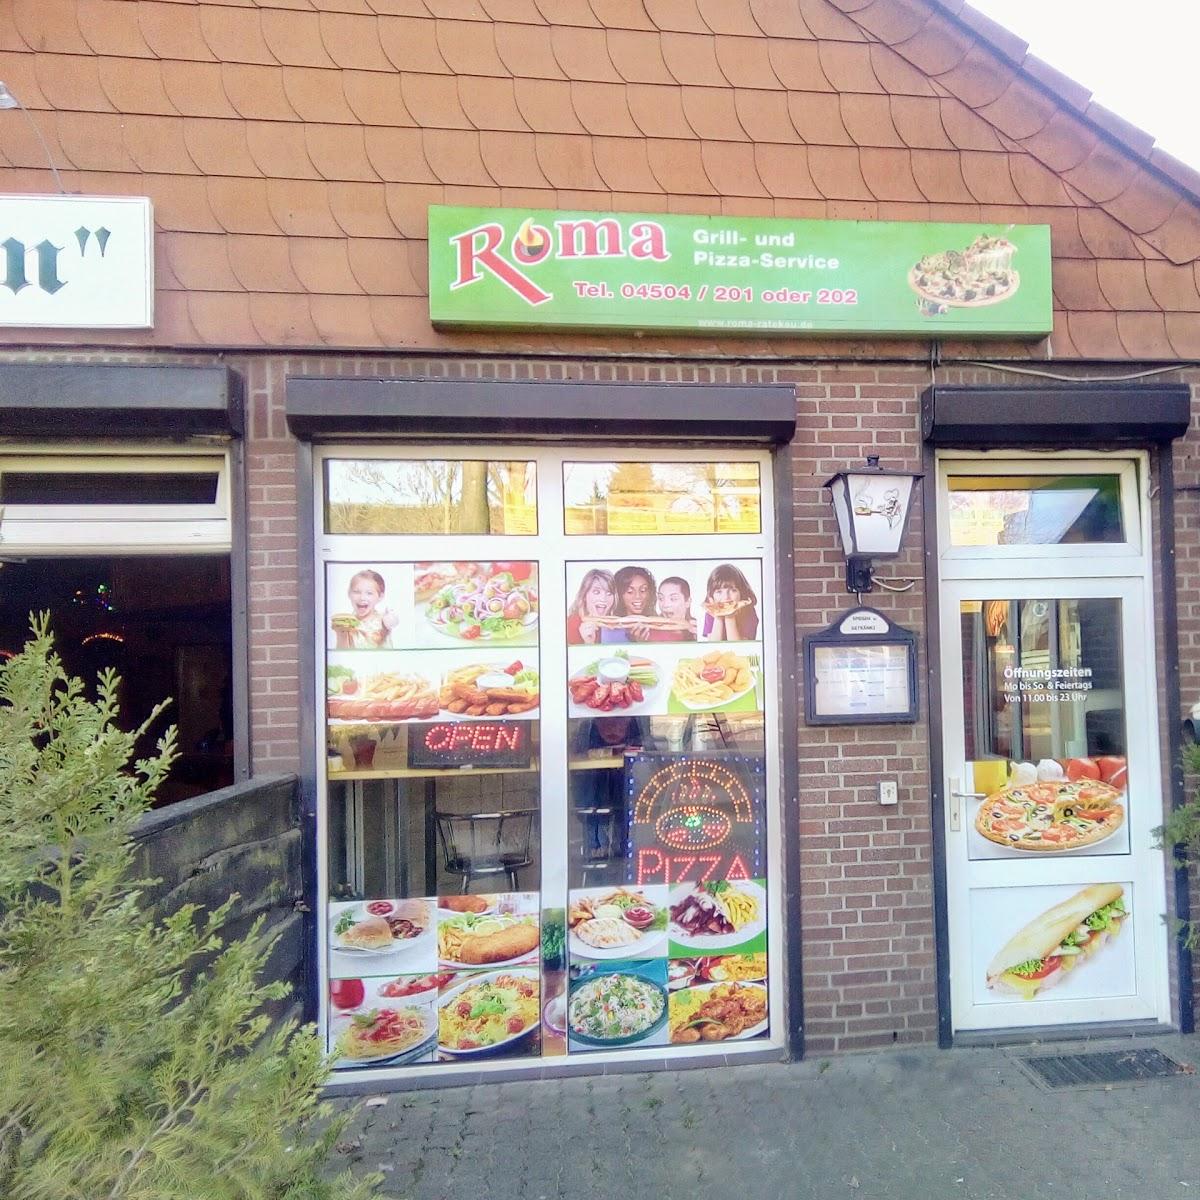 Restaurant "Roma Pizza-Service" in Ratekau